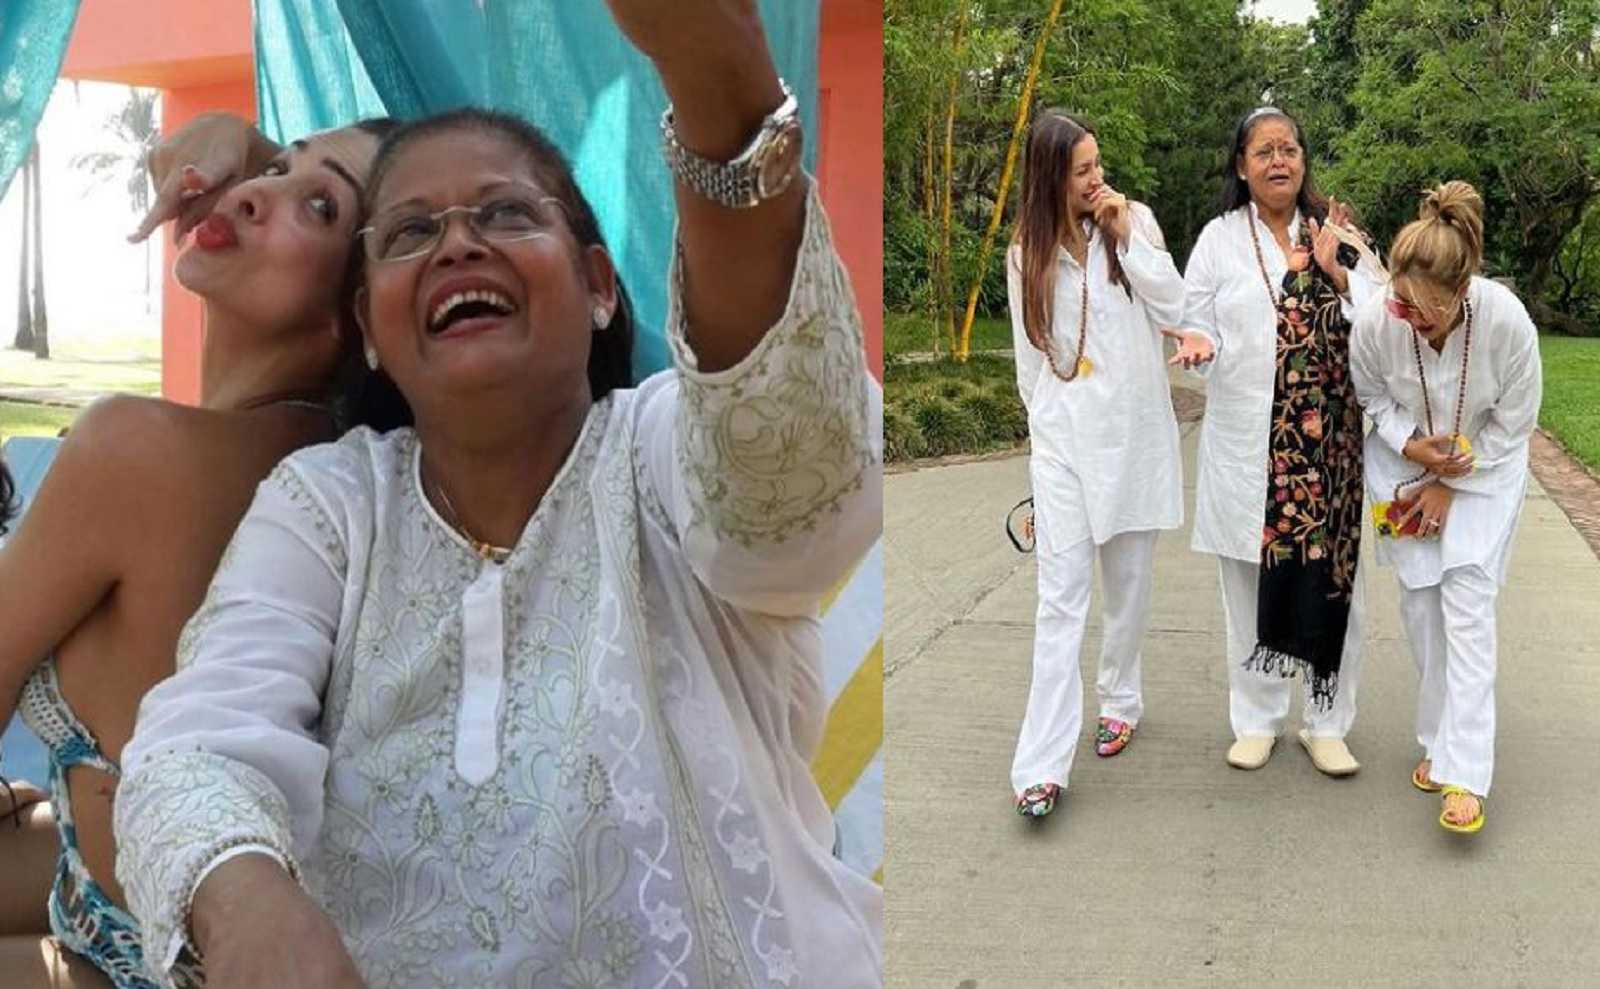 Malaika Arora's birthday post for mother Joyce Arora has unseen candid family photos, seen it yet?